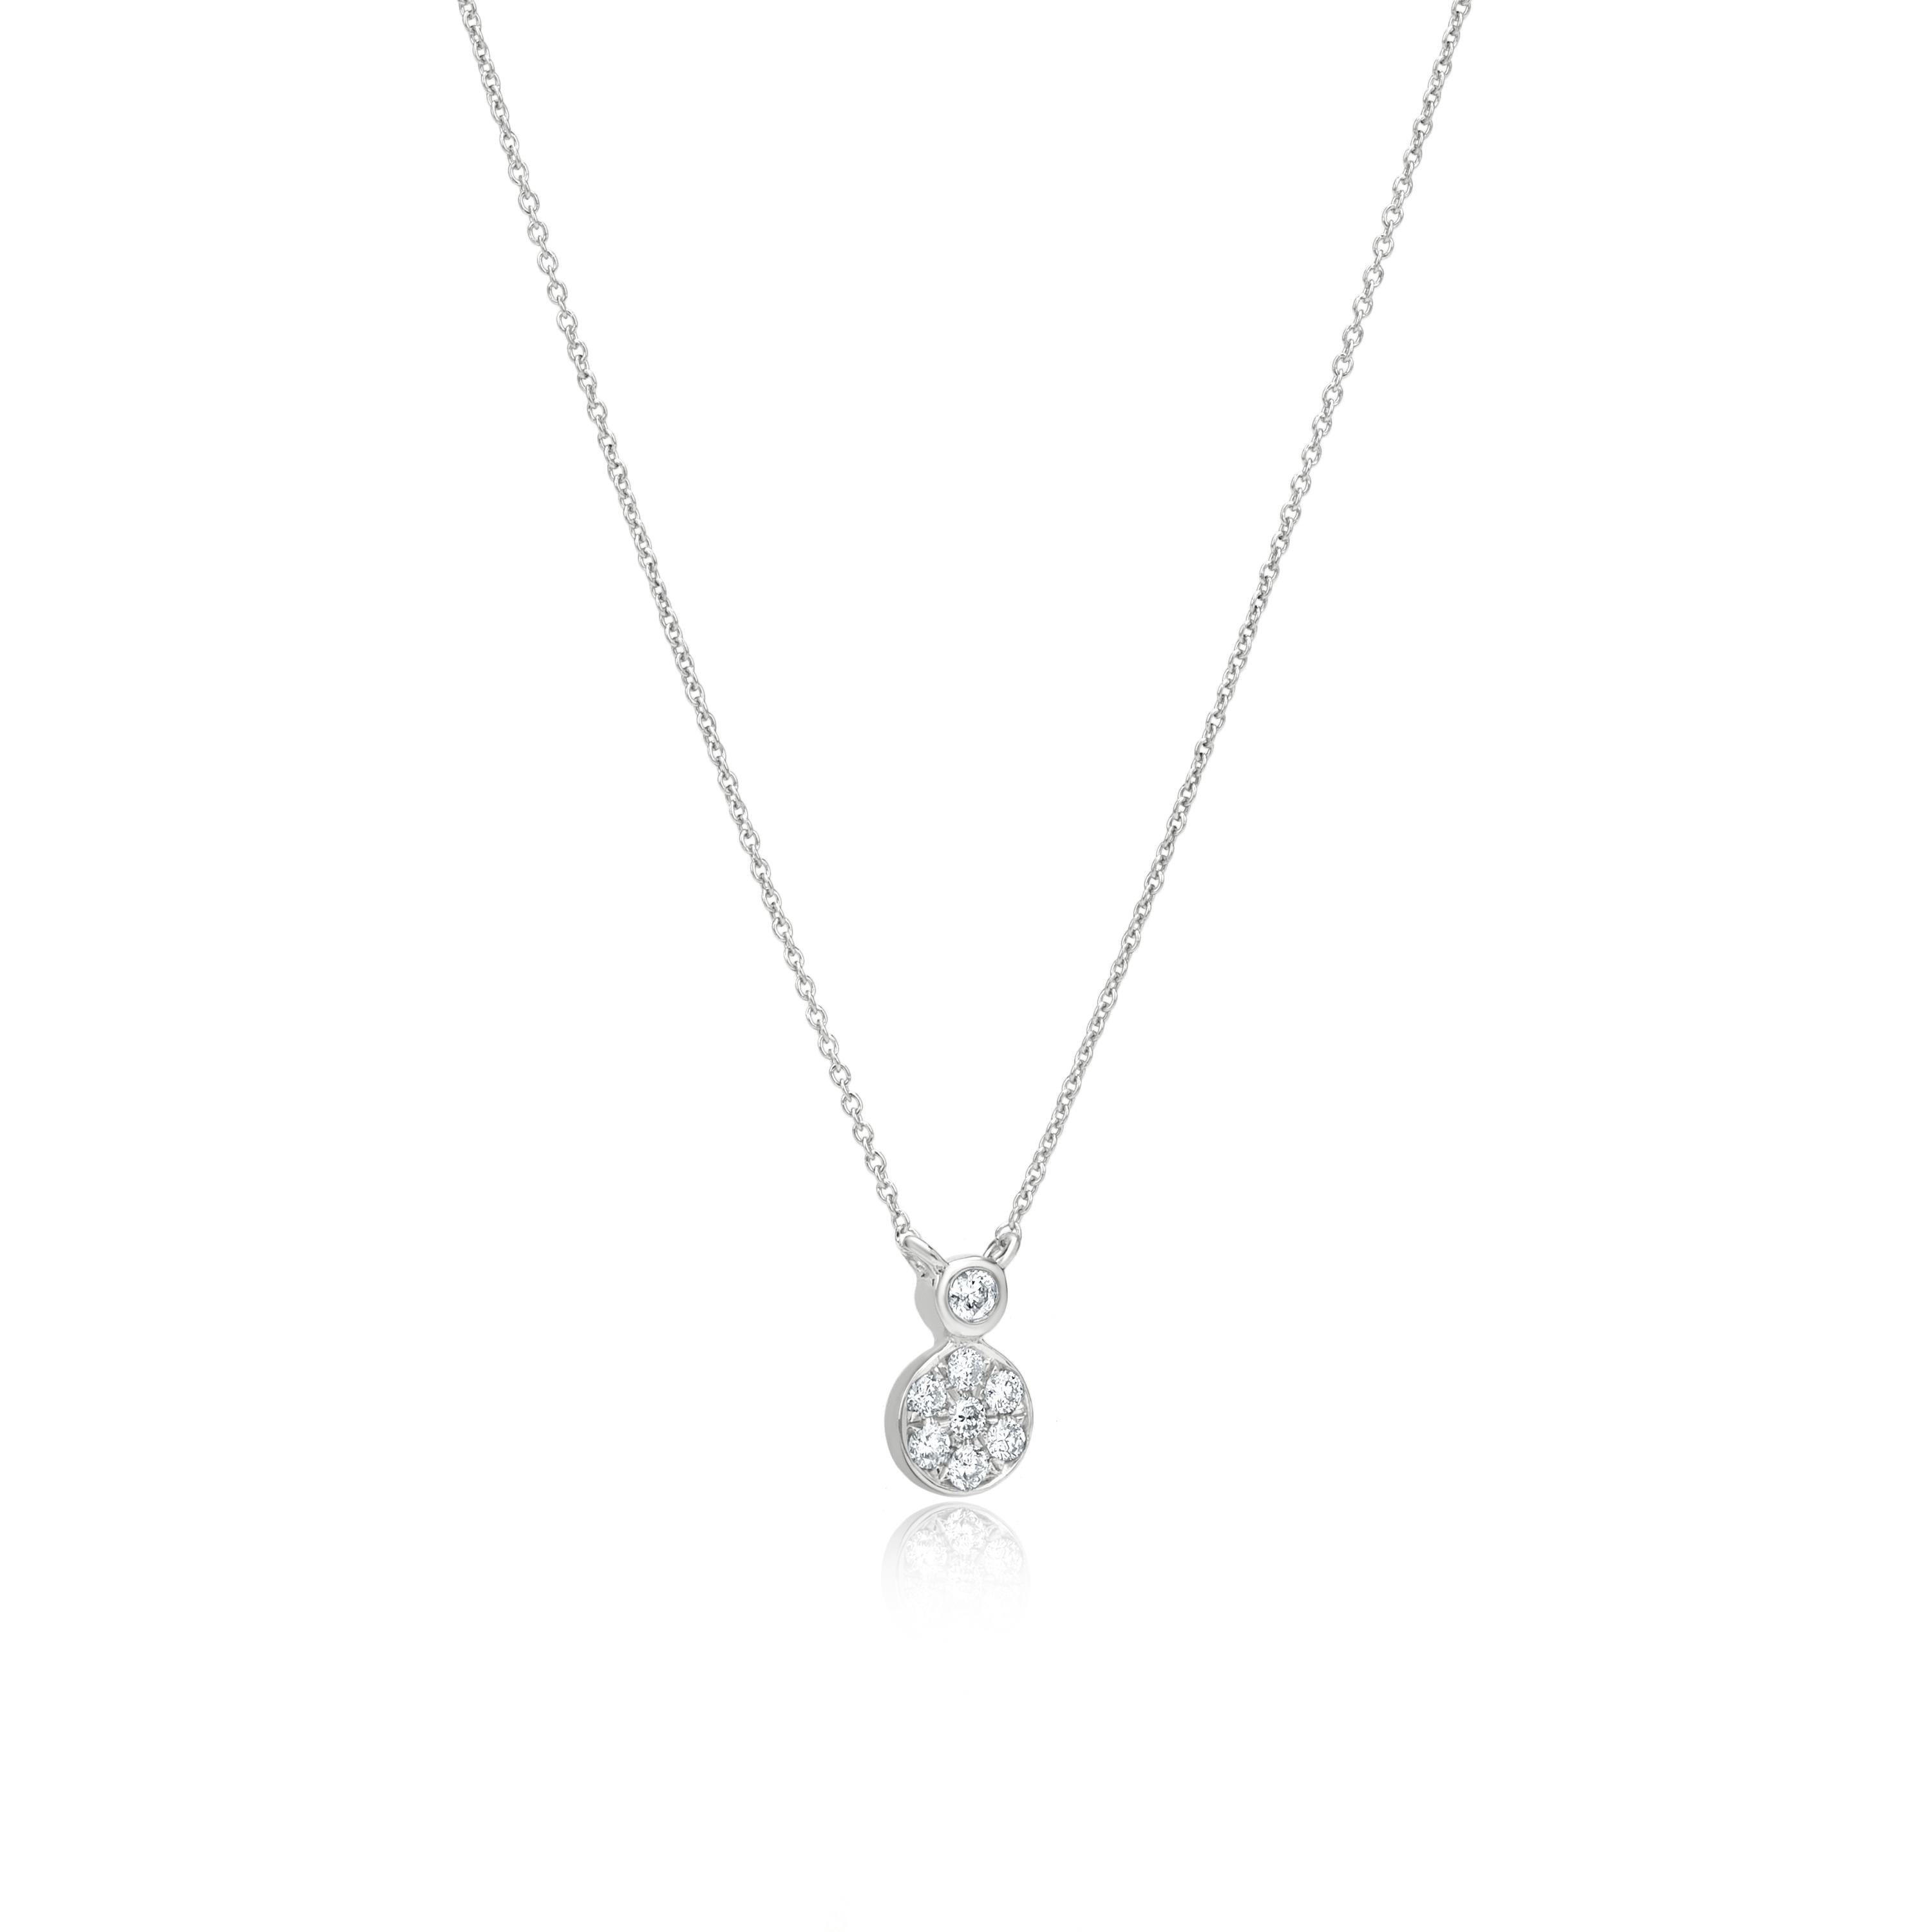 Round Cut Luxle Diamond Circle Pendant Necklace in 18k White Gold